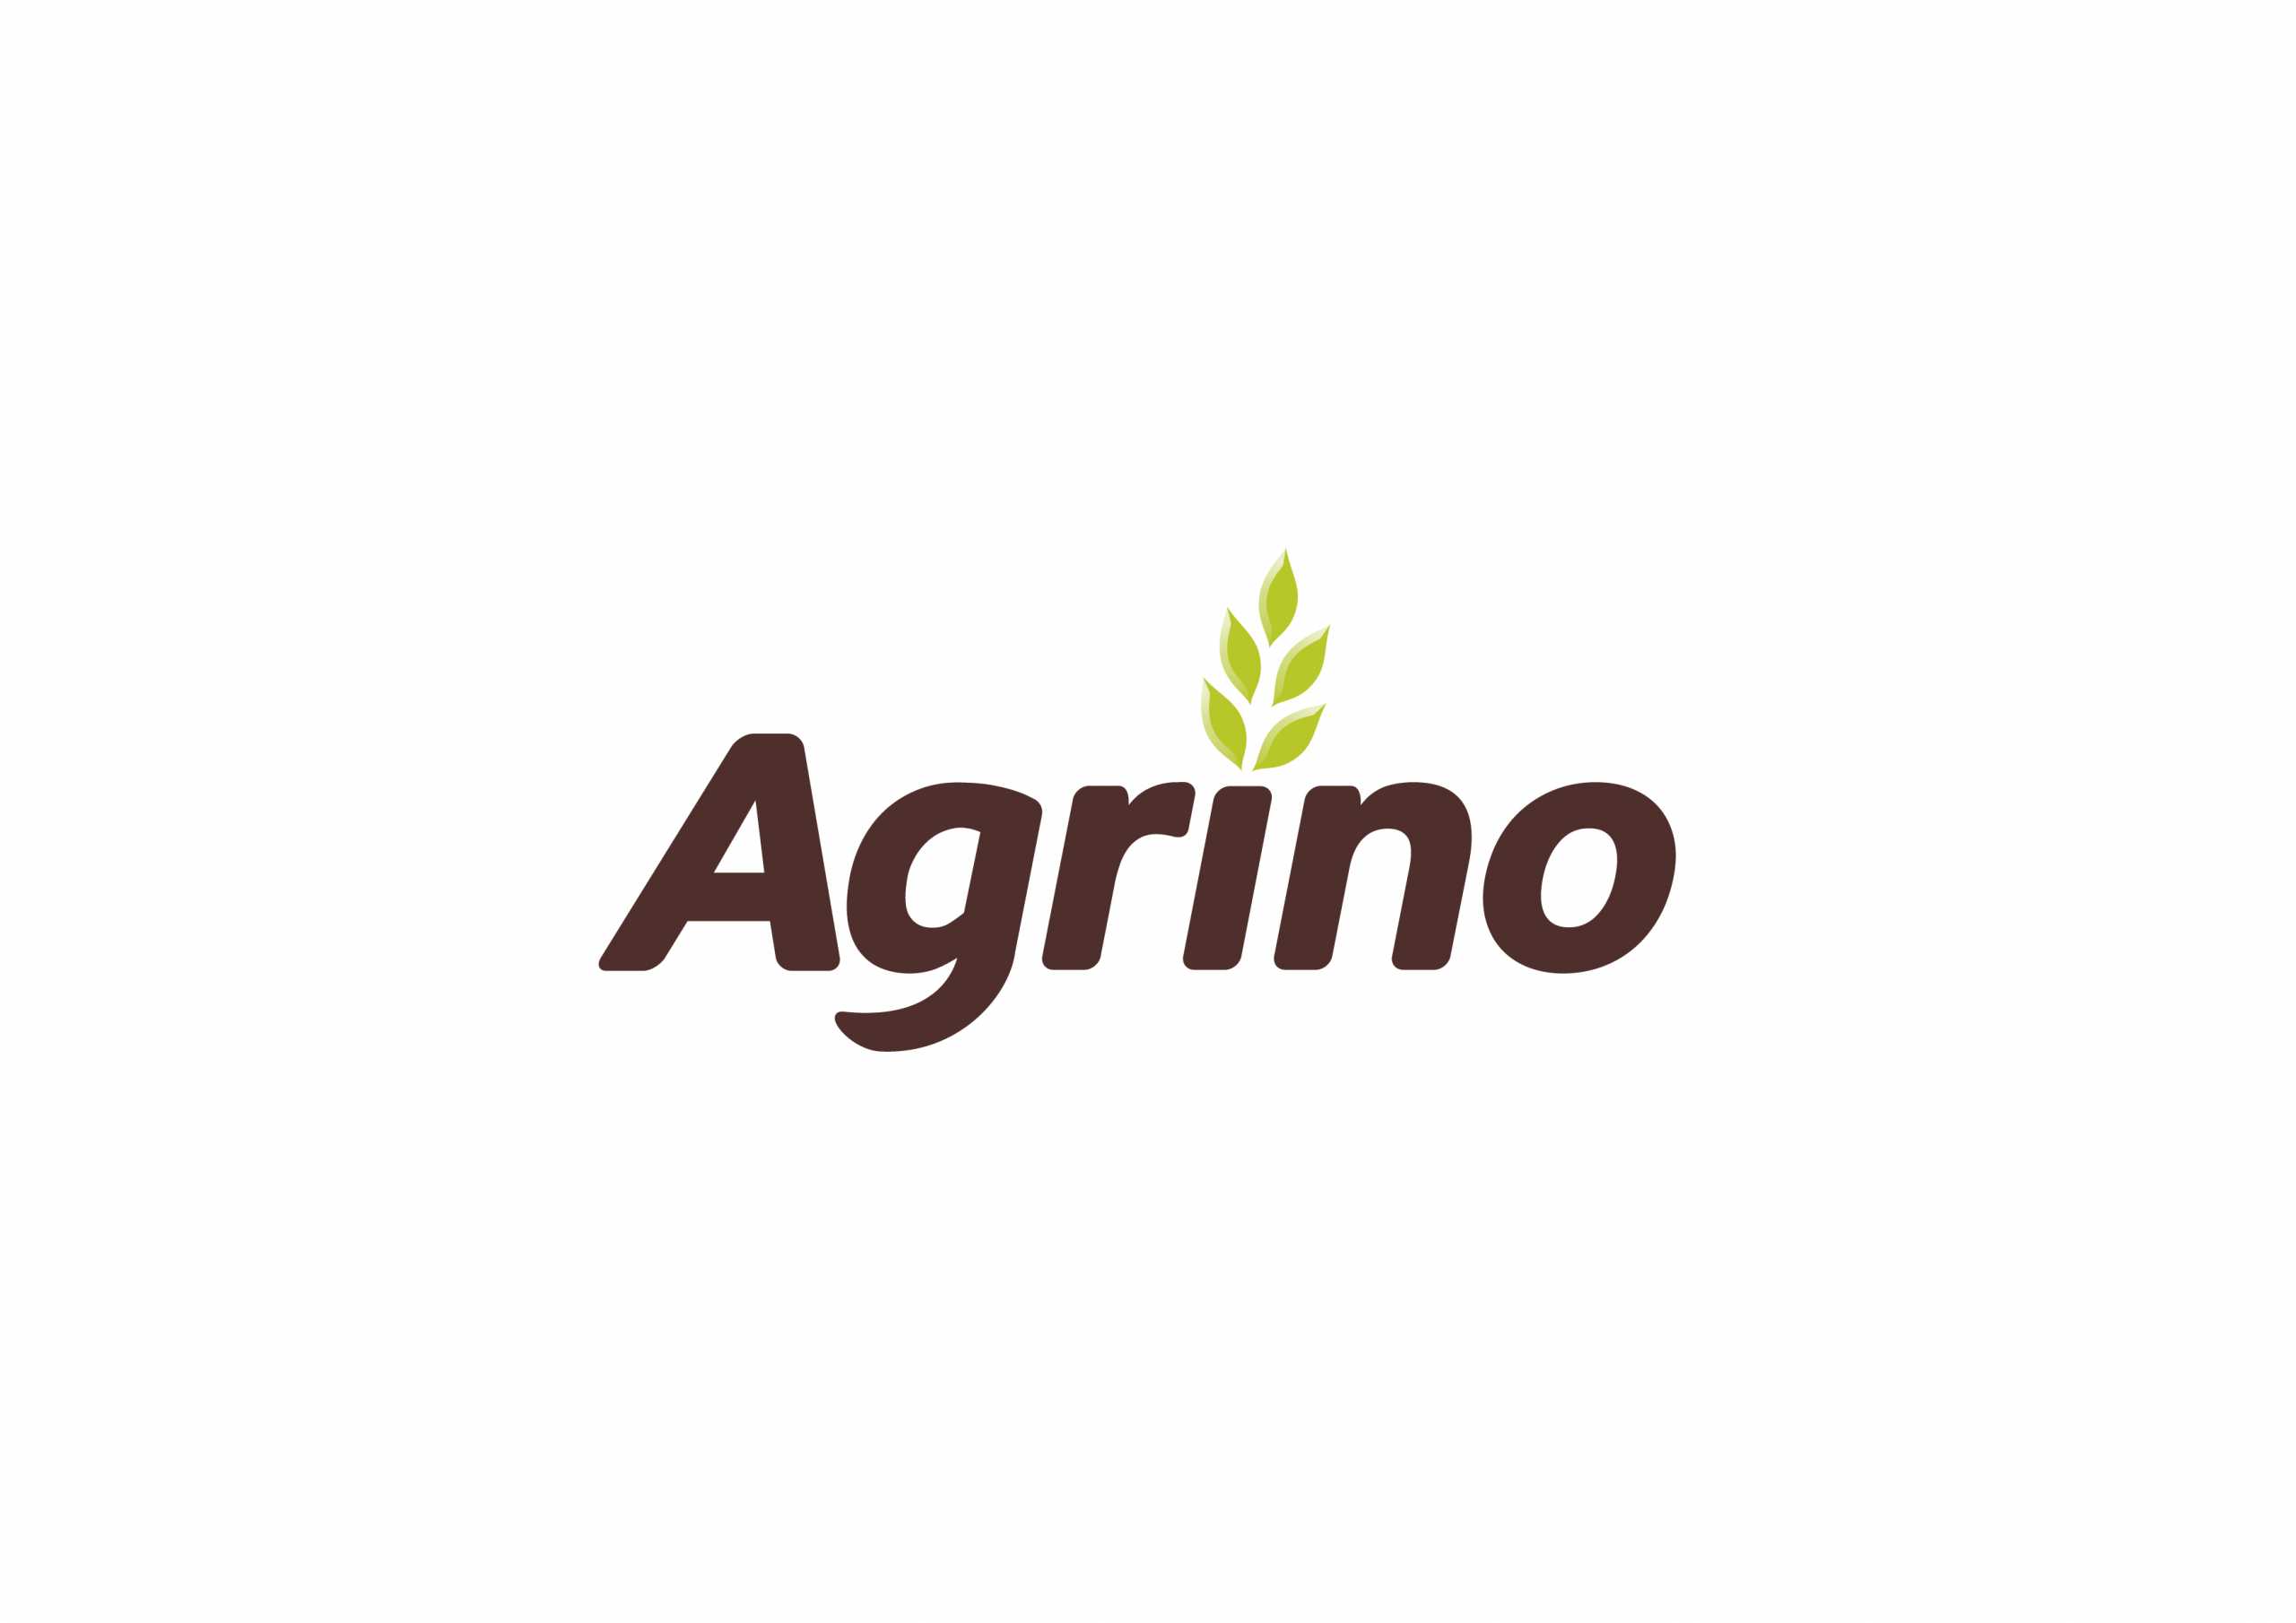 Agrino: Σημαντική αύξηση πωλήσεων το 2020 – Πώς κινήθηκε η ζήτηση για ρύζι, όσπρια και ρυζογκοφρέτες